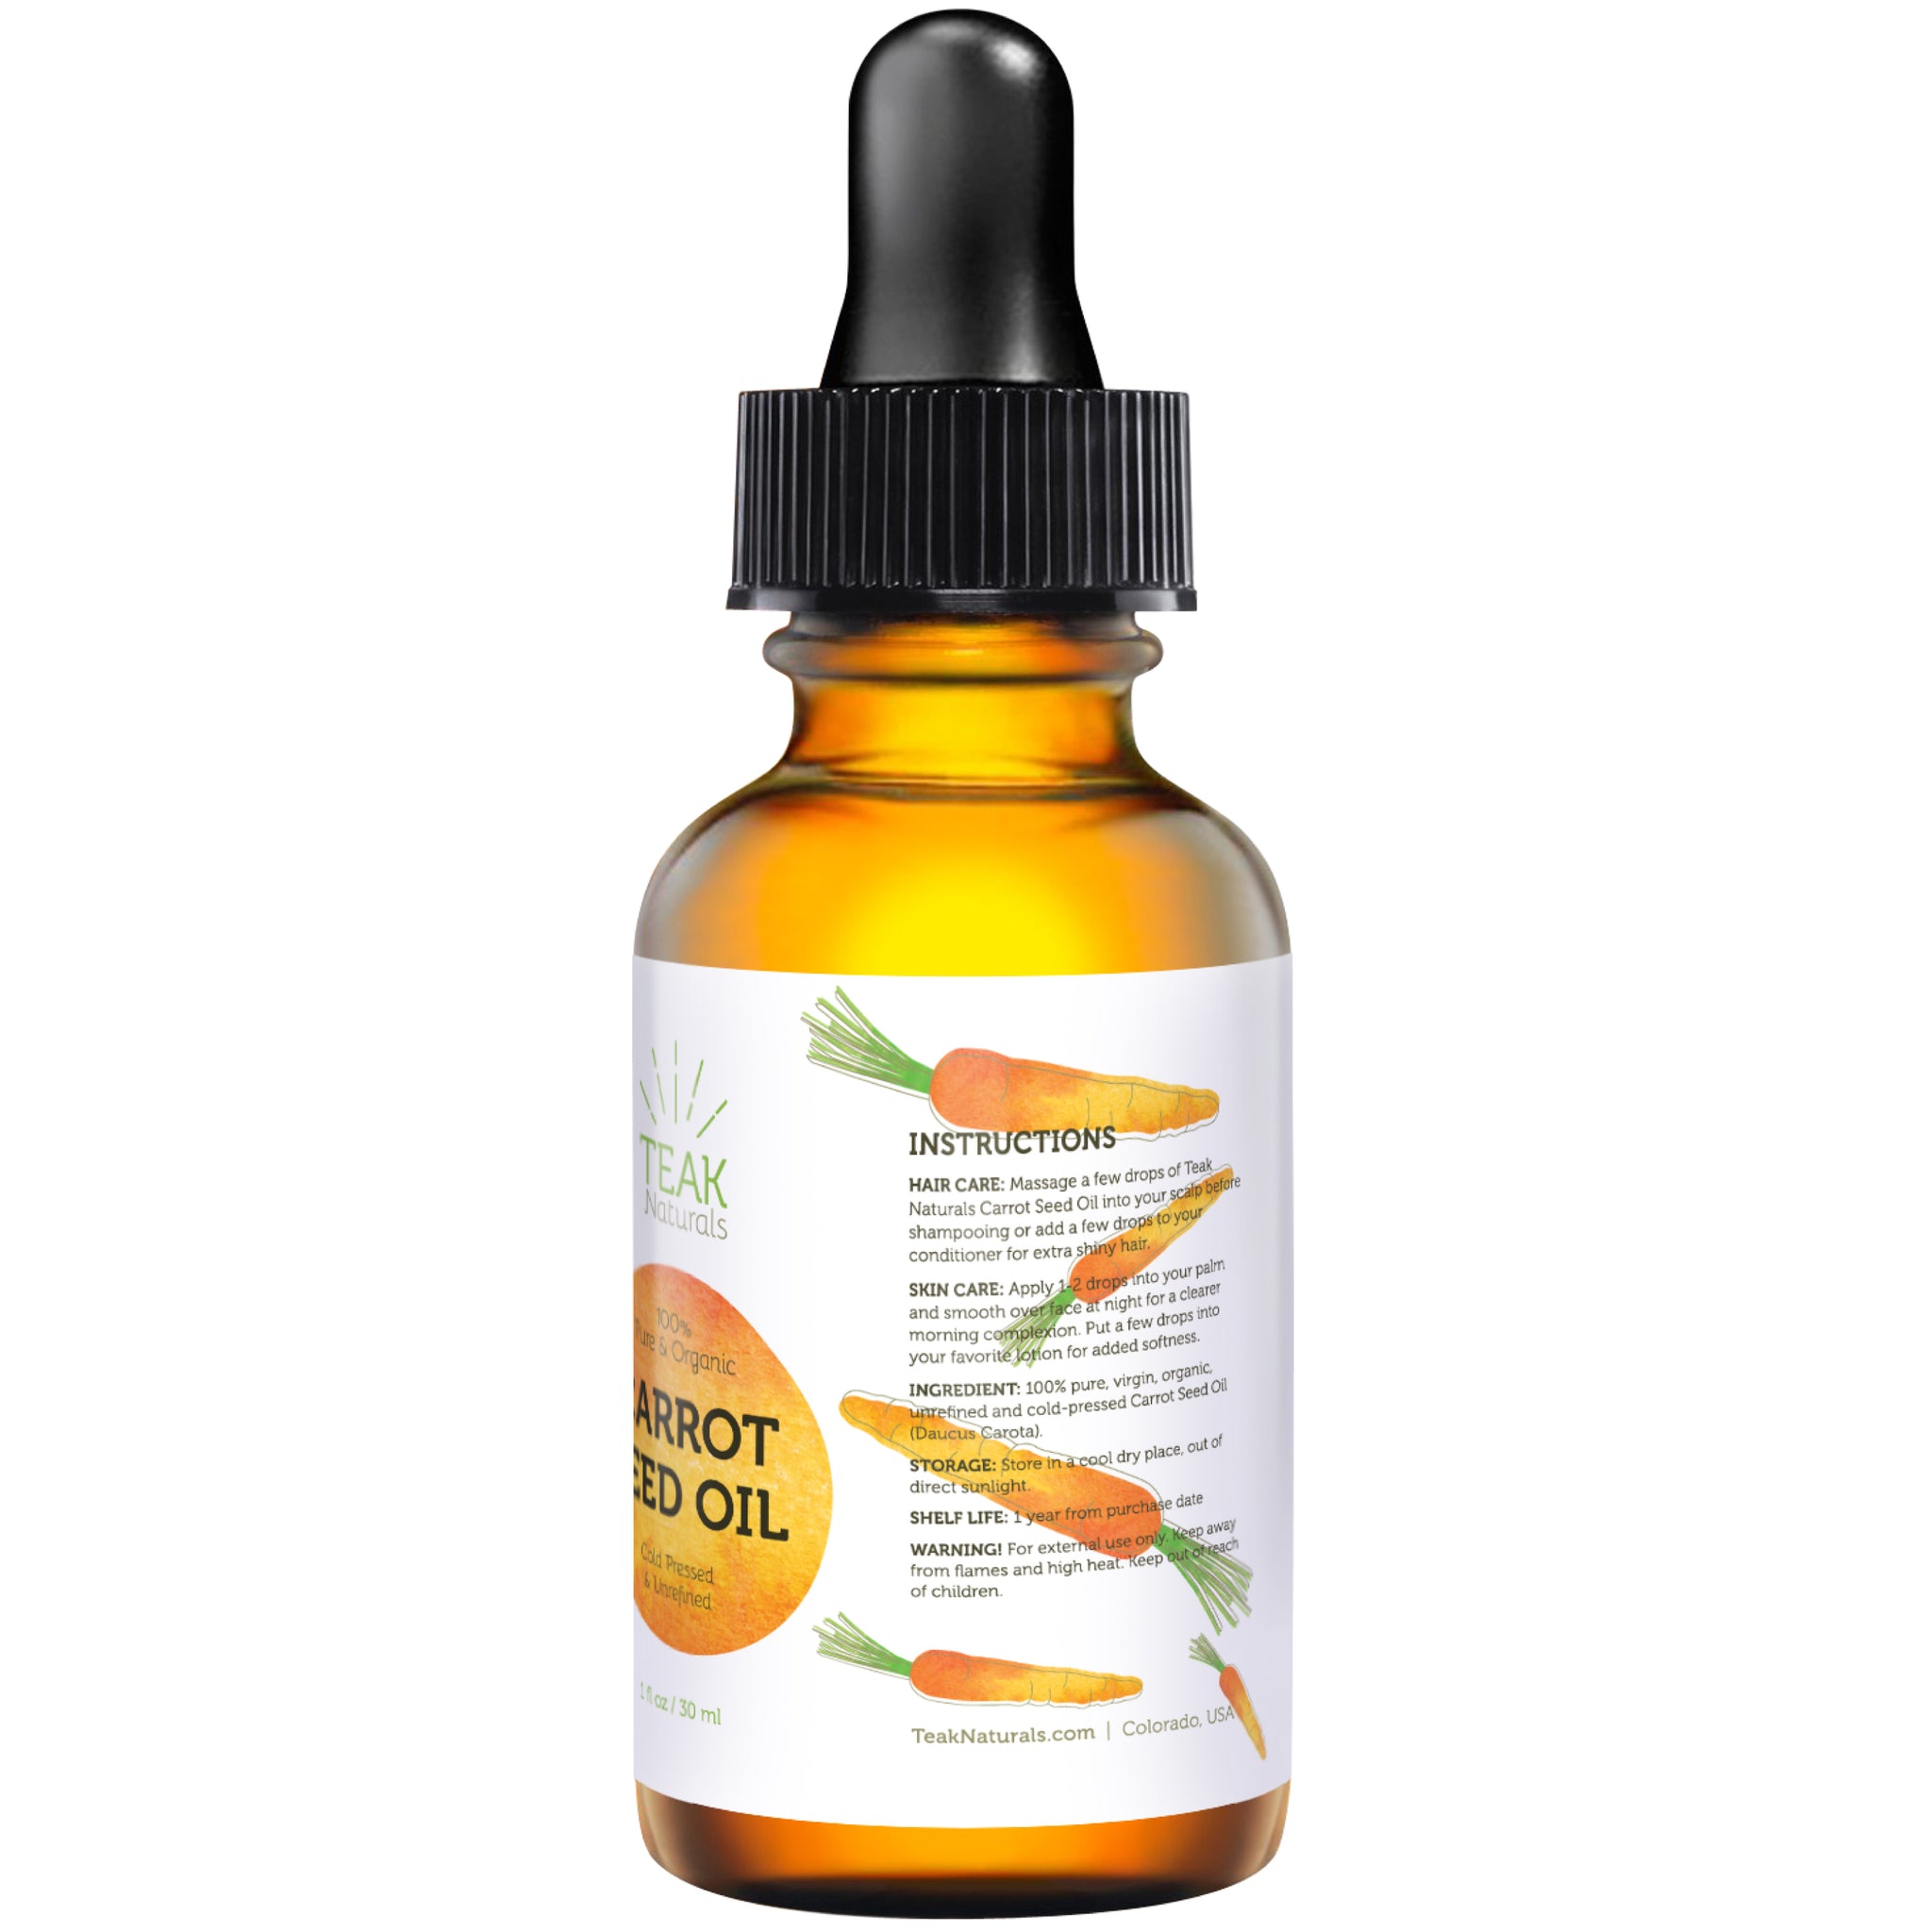 Organic Carrot Seed Oil - 1 oz – Teak Naturals